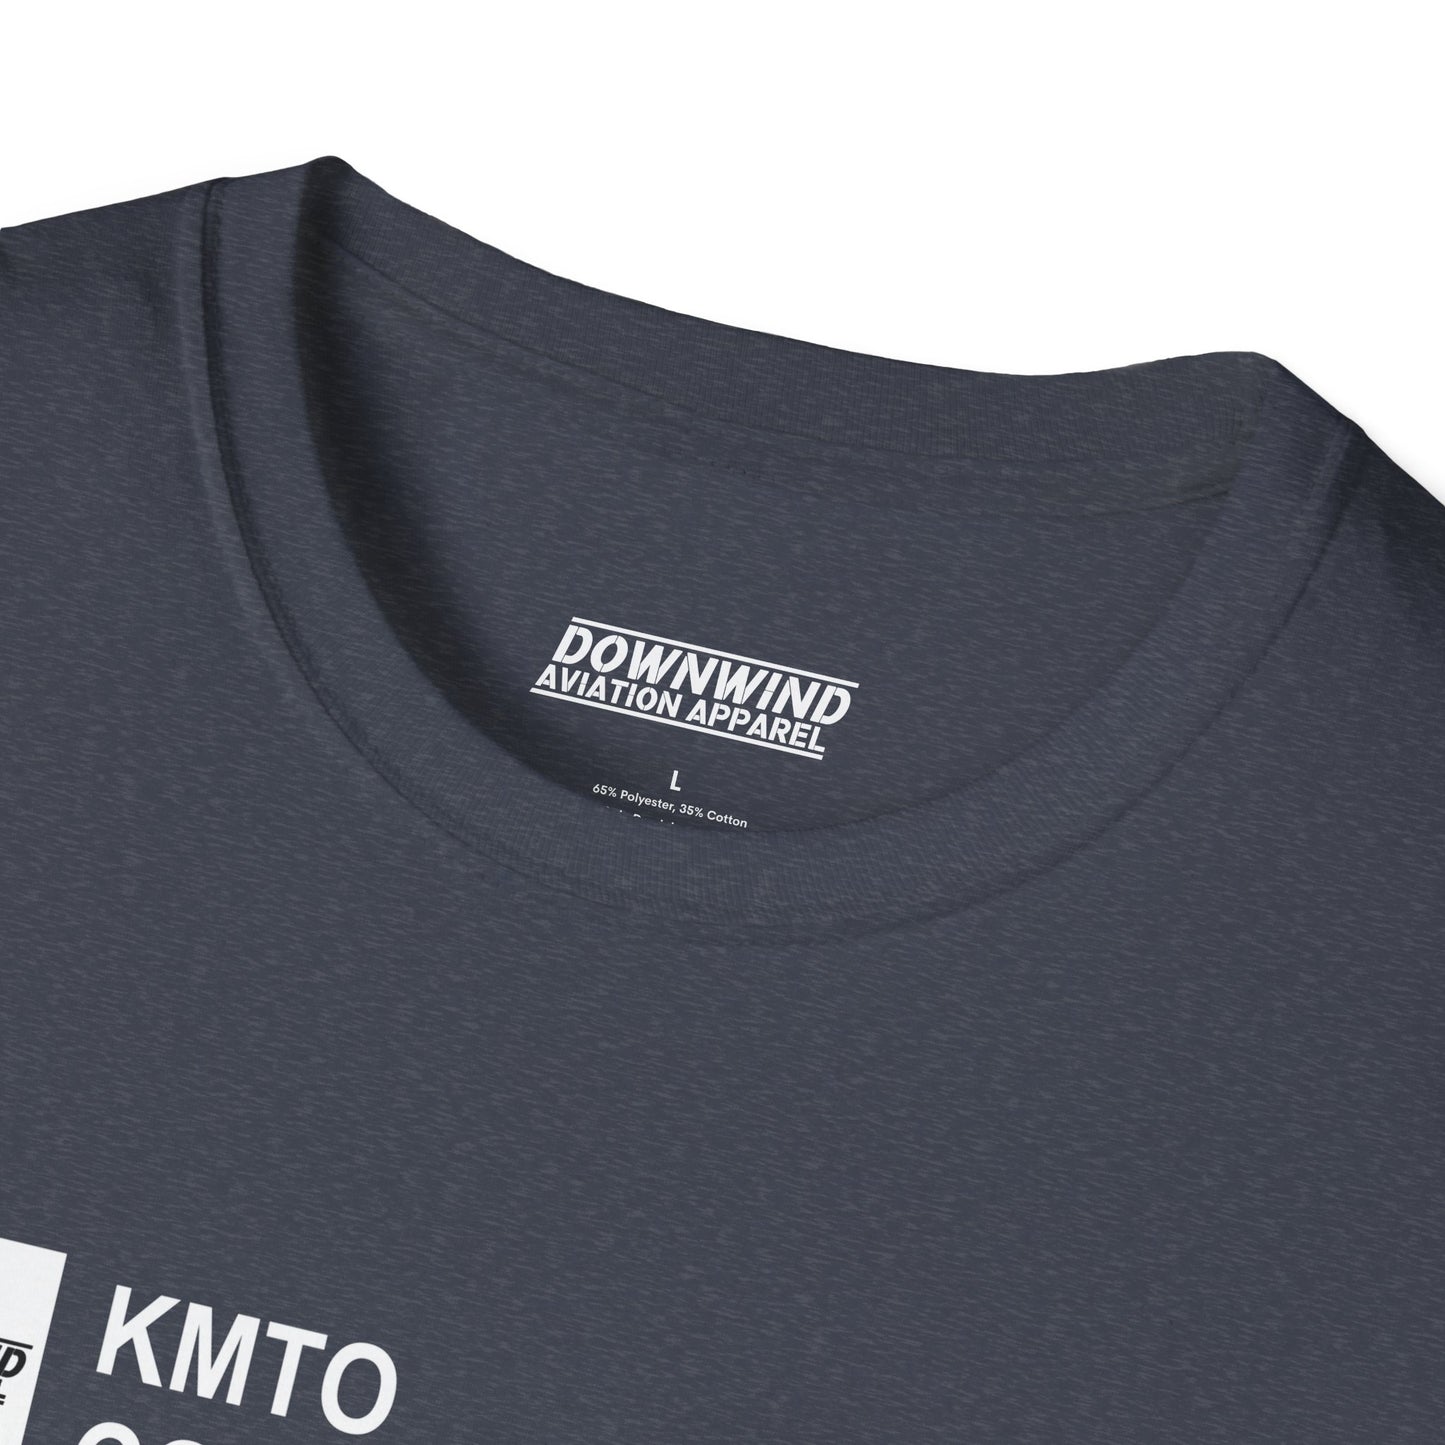 KMTO / Coles County Meml T-Shirt